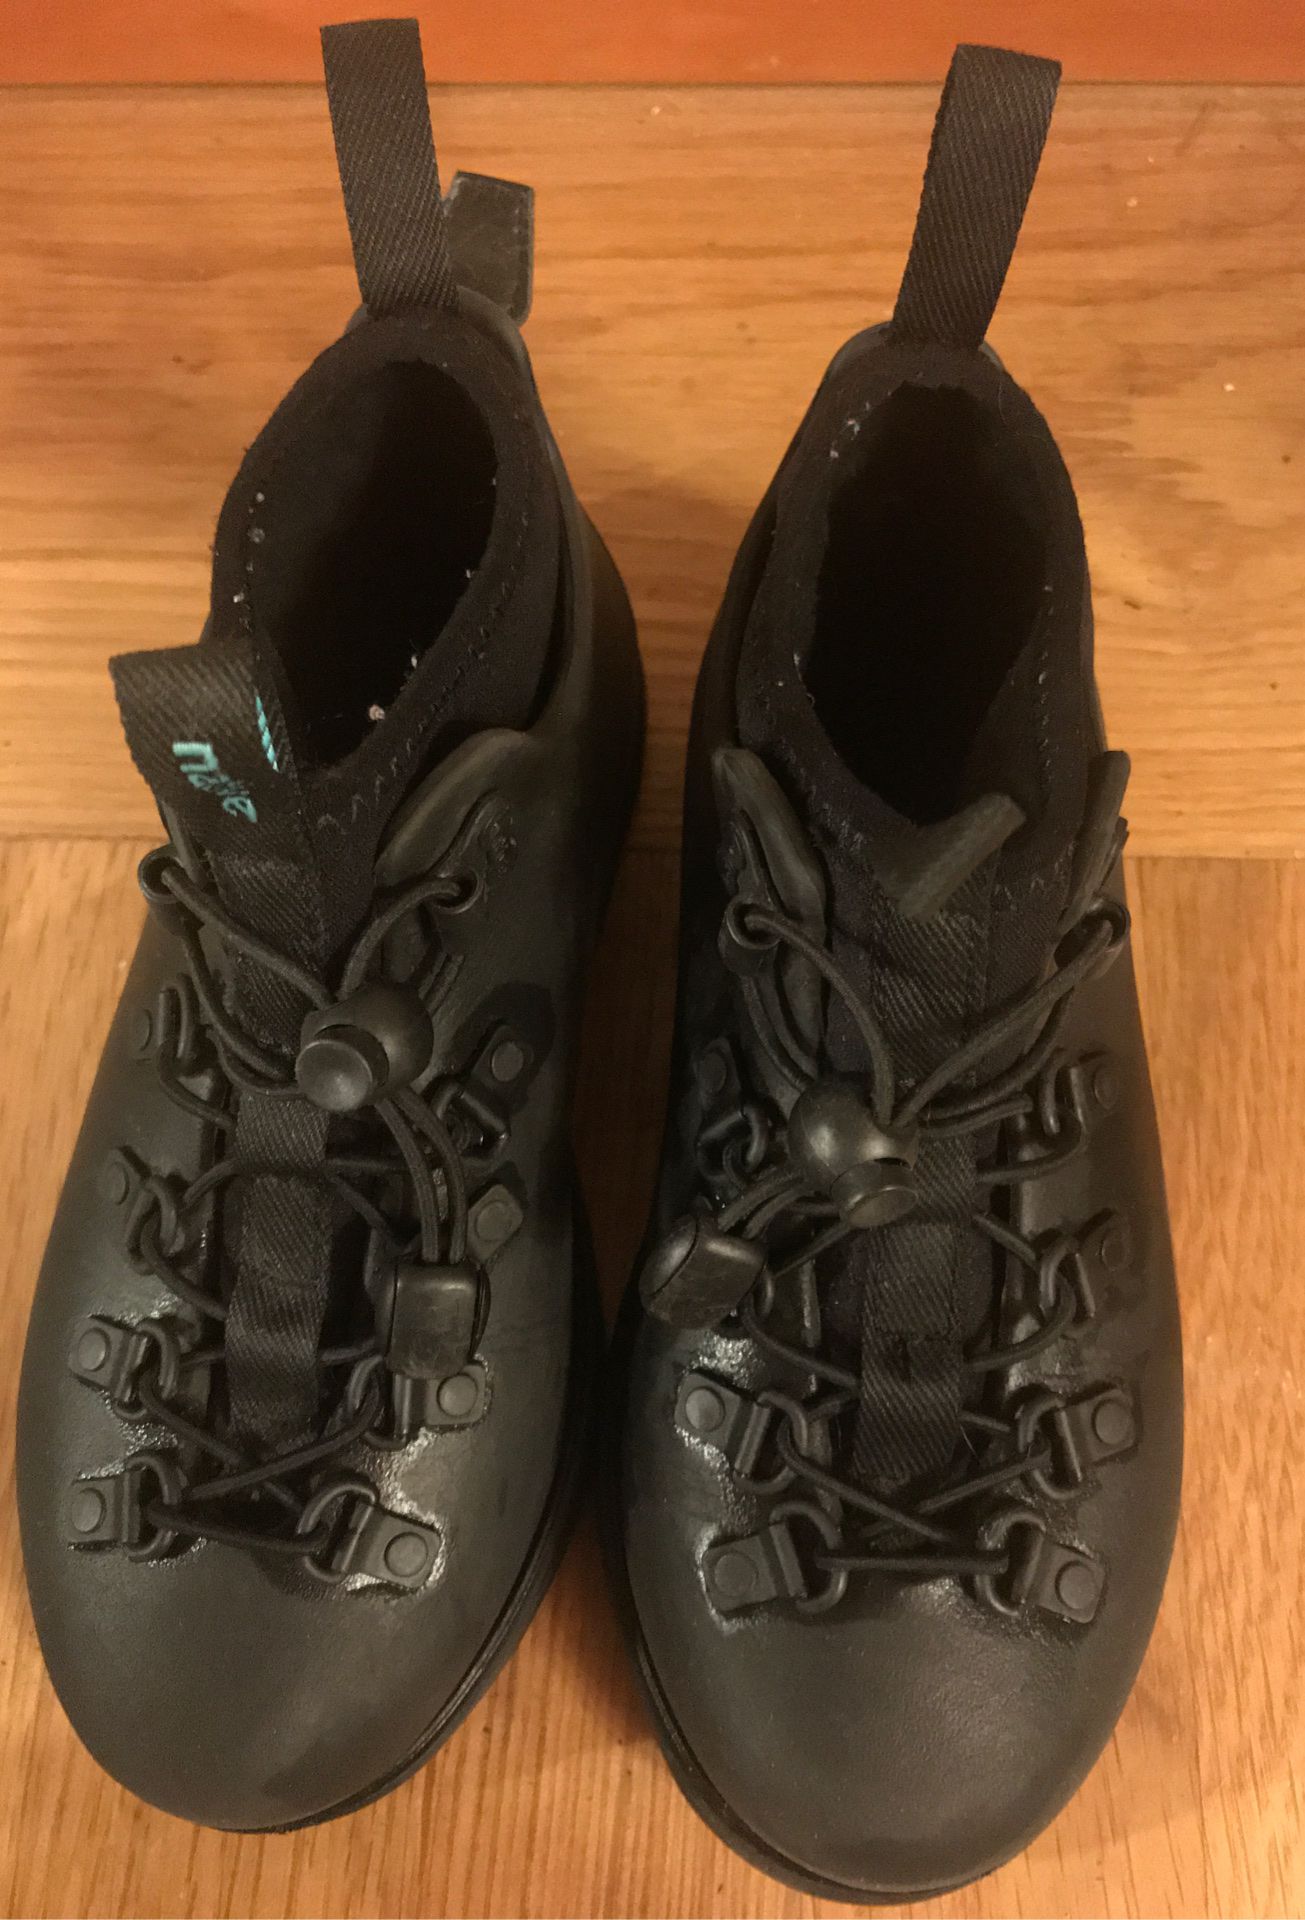 Native Shoes Black Waterproof Rain Boot Shoes Fitzsimmons Exc. Cond sz 12 Kids